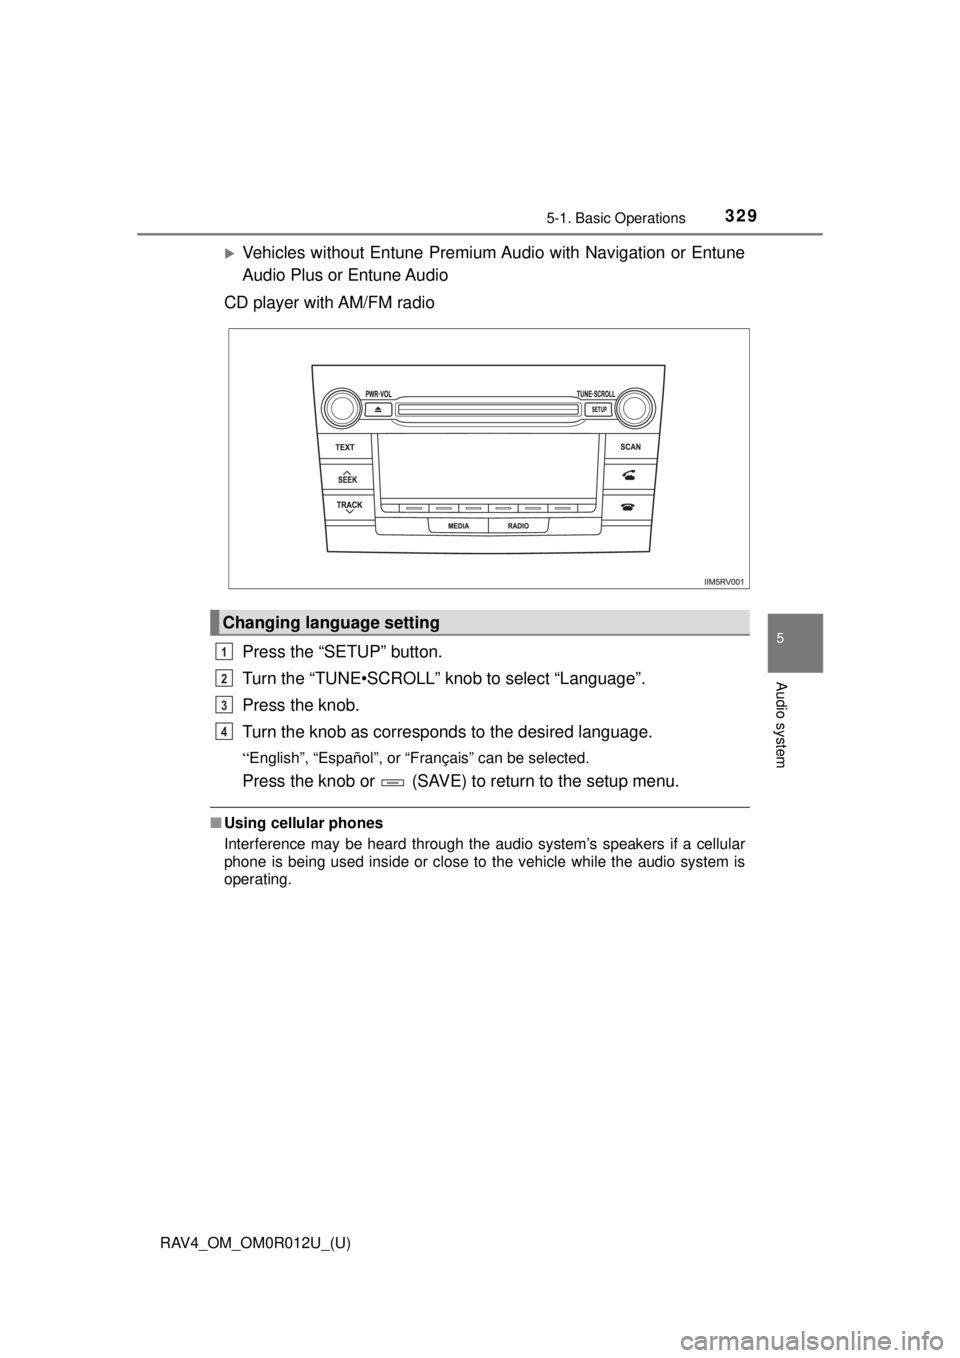 TOYOTA RAV4 2018  Owners Manual (in English) RAV4_OM_OM0R012U_(U)
3295-1. Basic Operations
5
Audio system
Vehicles without Entune Premium Audio with Navigation or Entune
Audio Plus or Entune Audio
CD player with AM/FM radio
Press the “SETUP